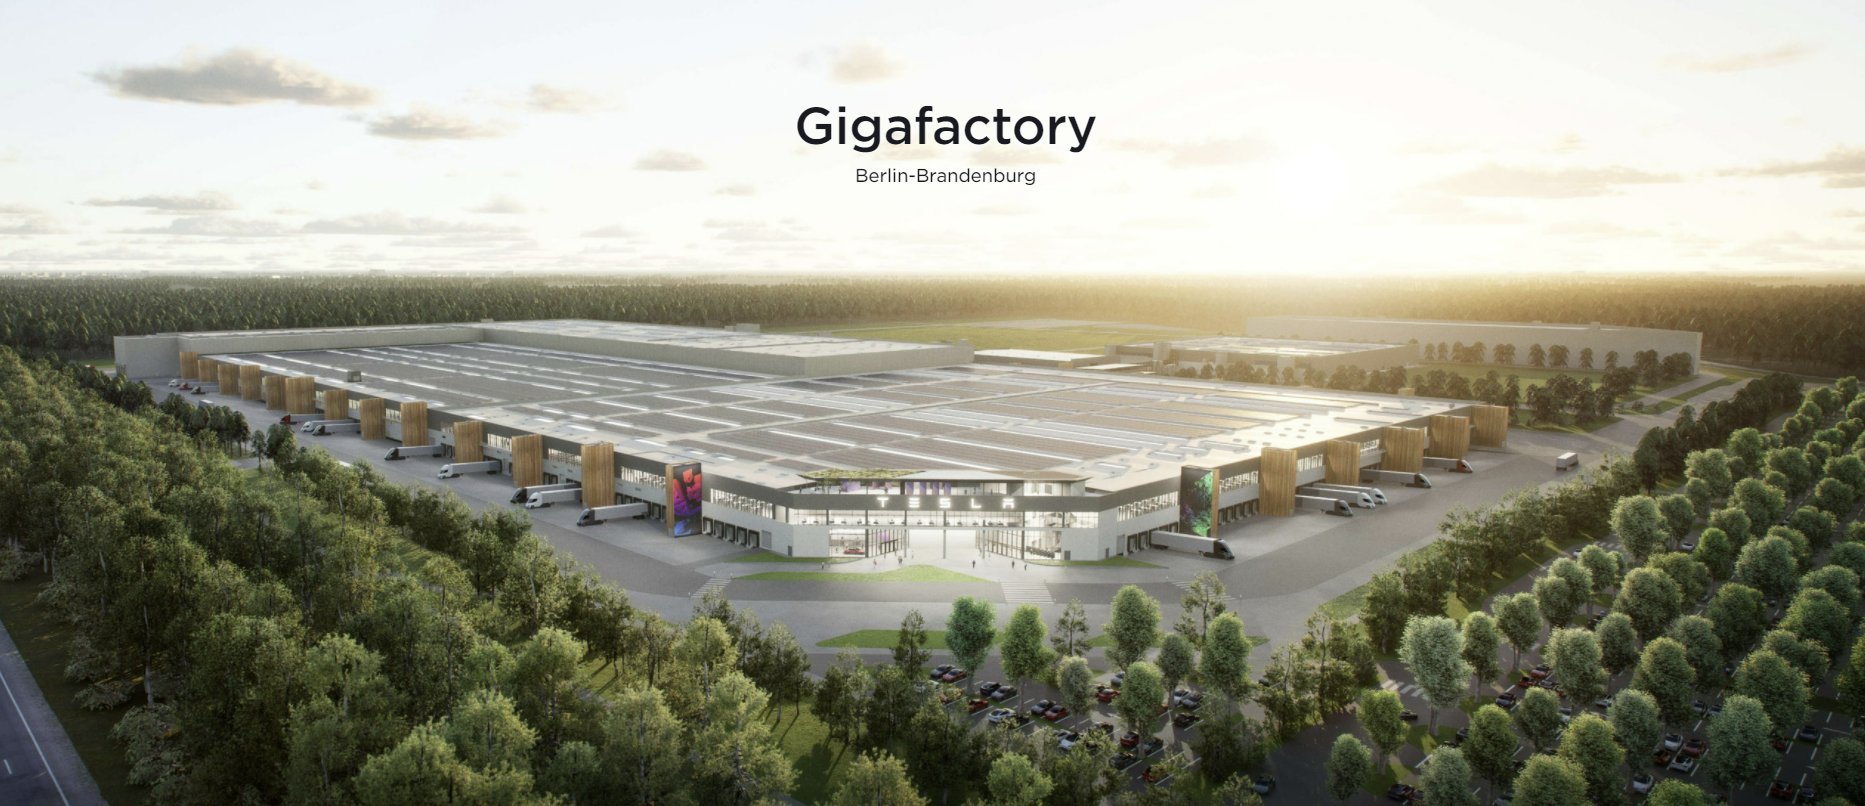 Gigafactory Berlin-Brandenburg